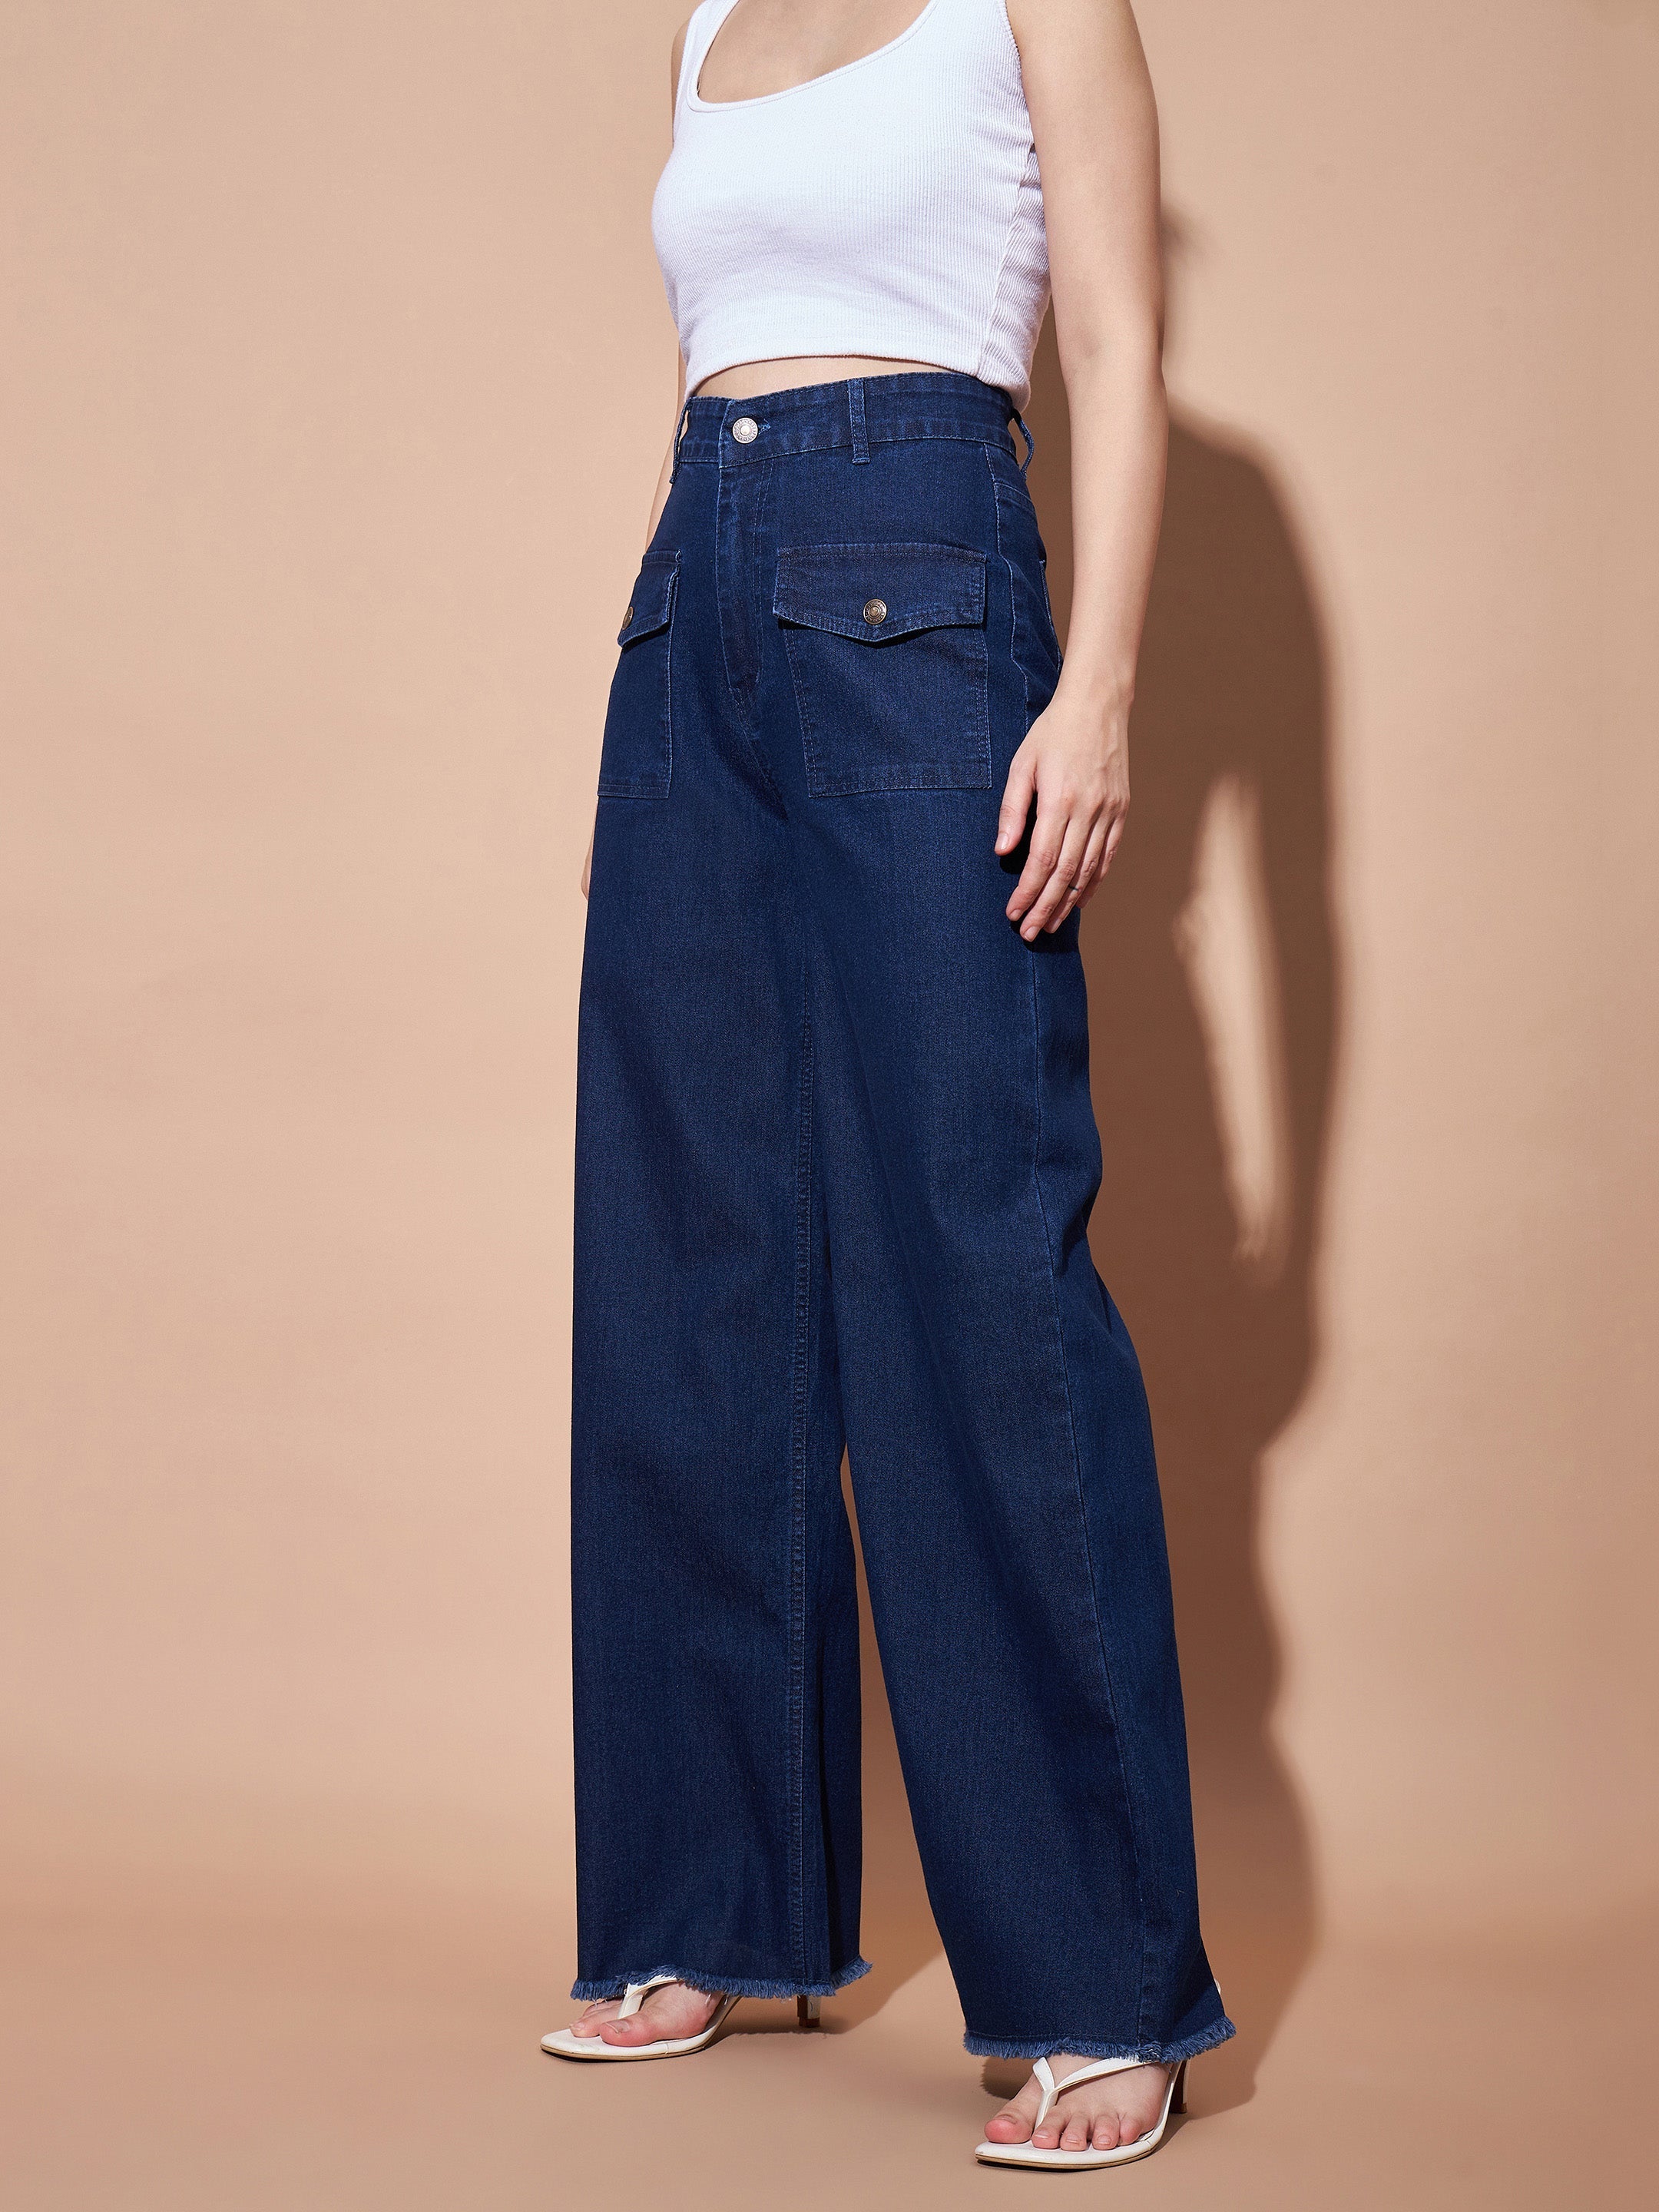 Women's Navy High Waist Flap Pocket Straight Jeans - Lyush